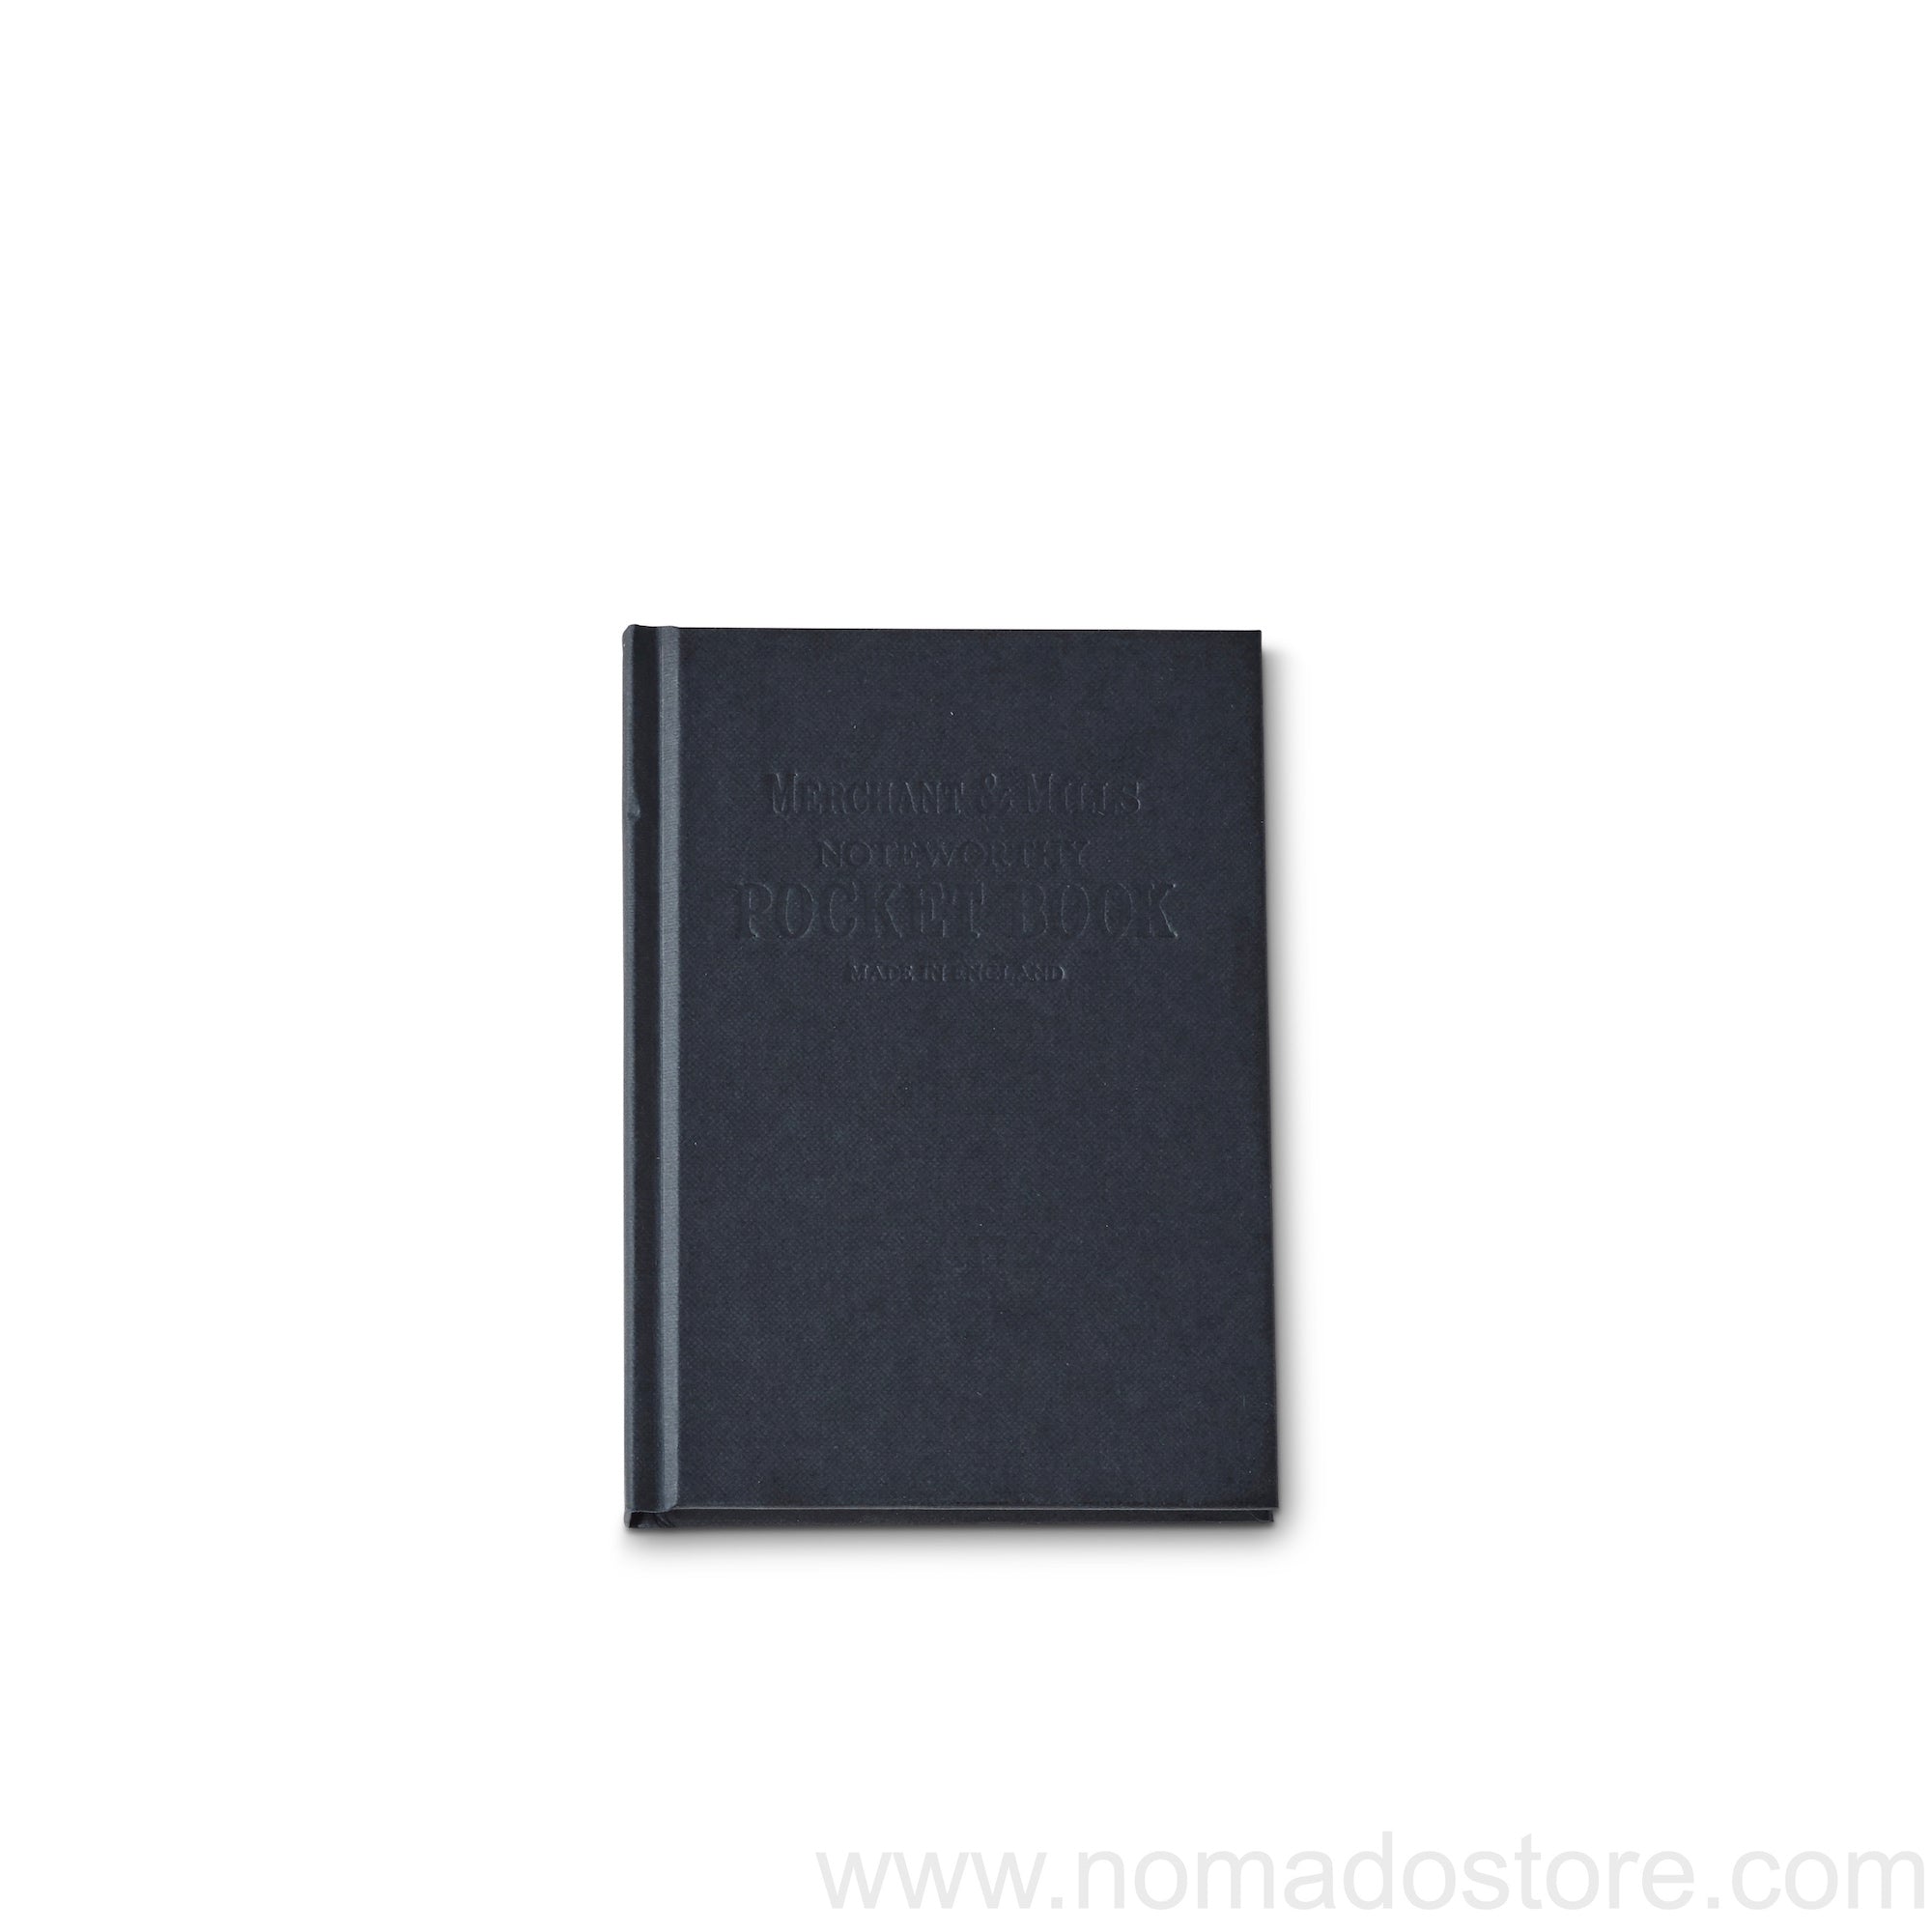 Merchant & Mills Observations Notebook Refill - NOMADO Store 